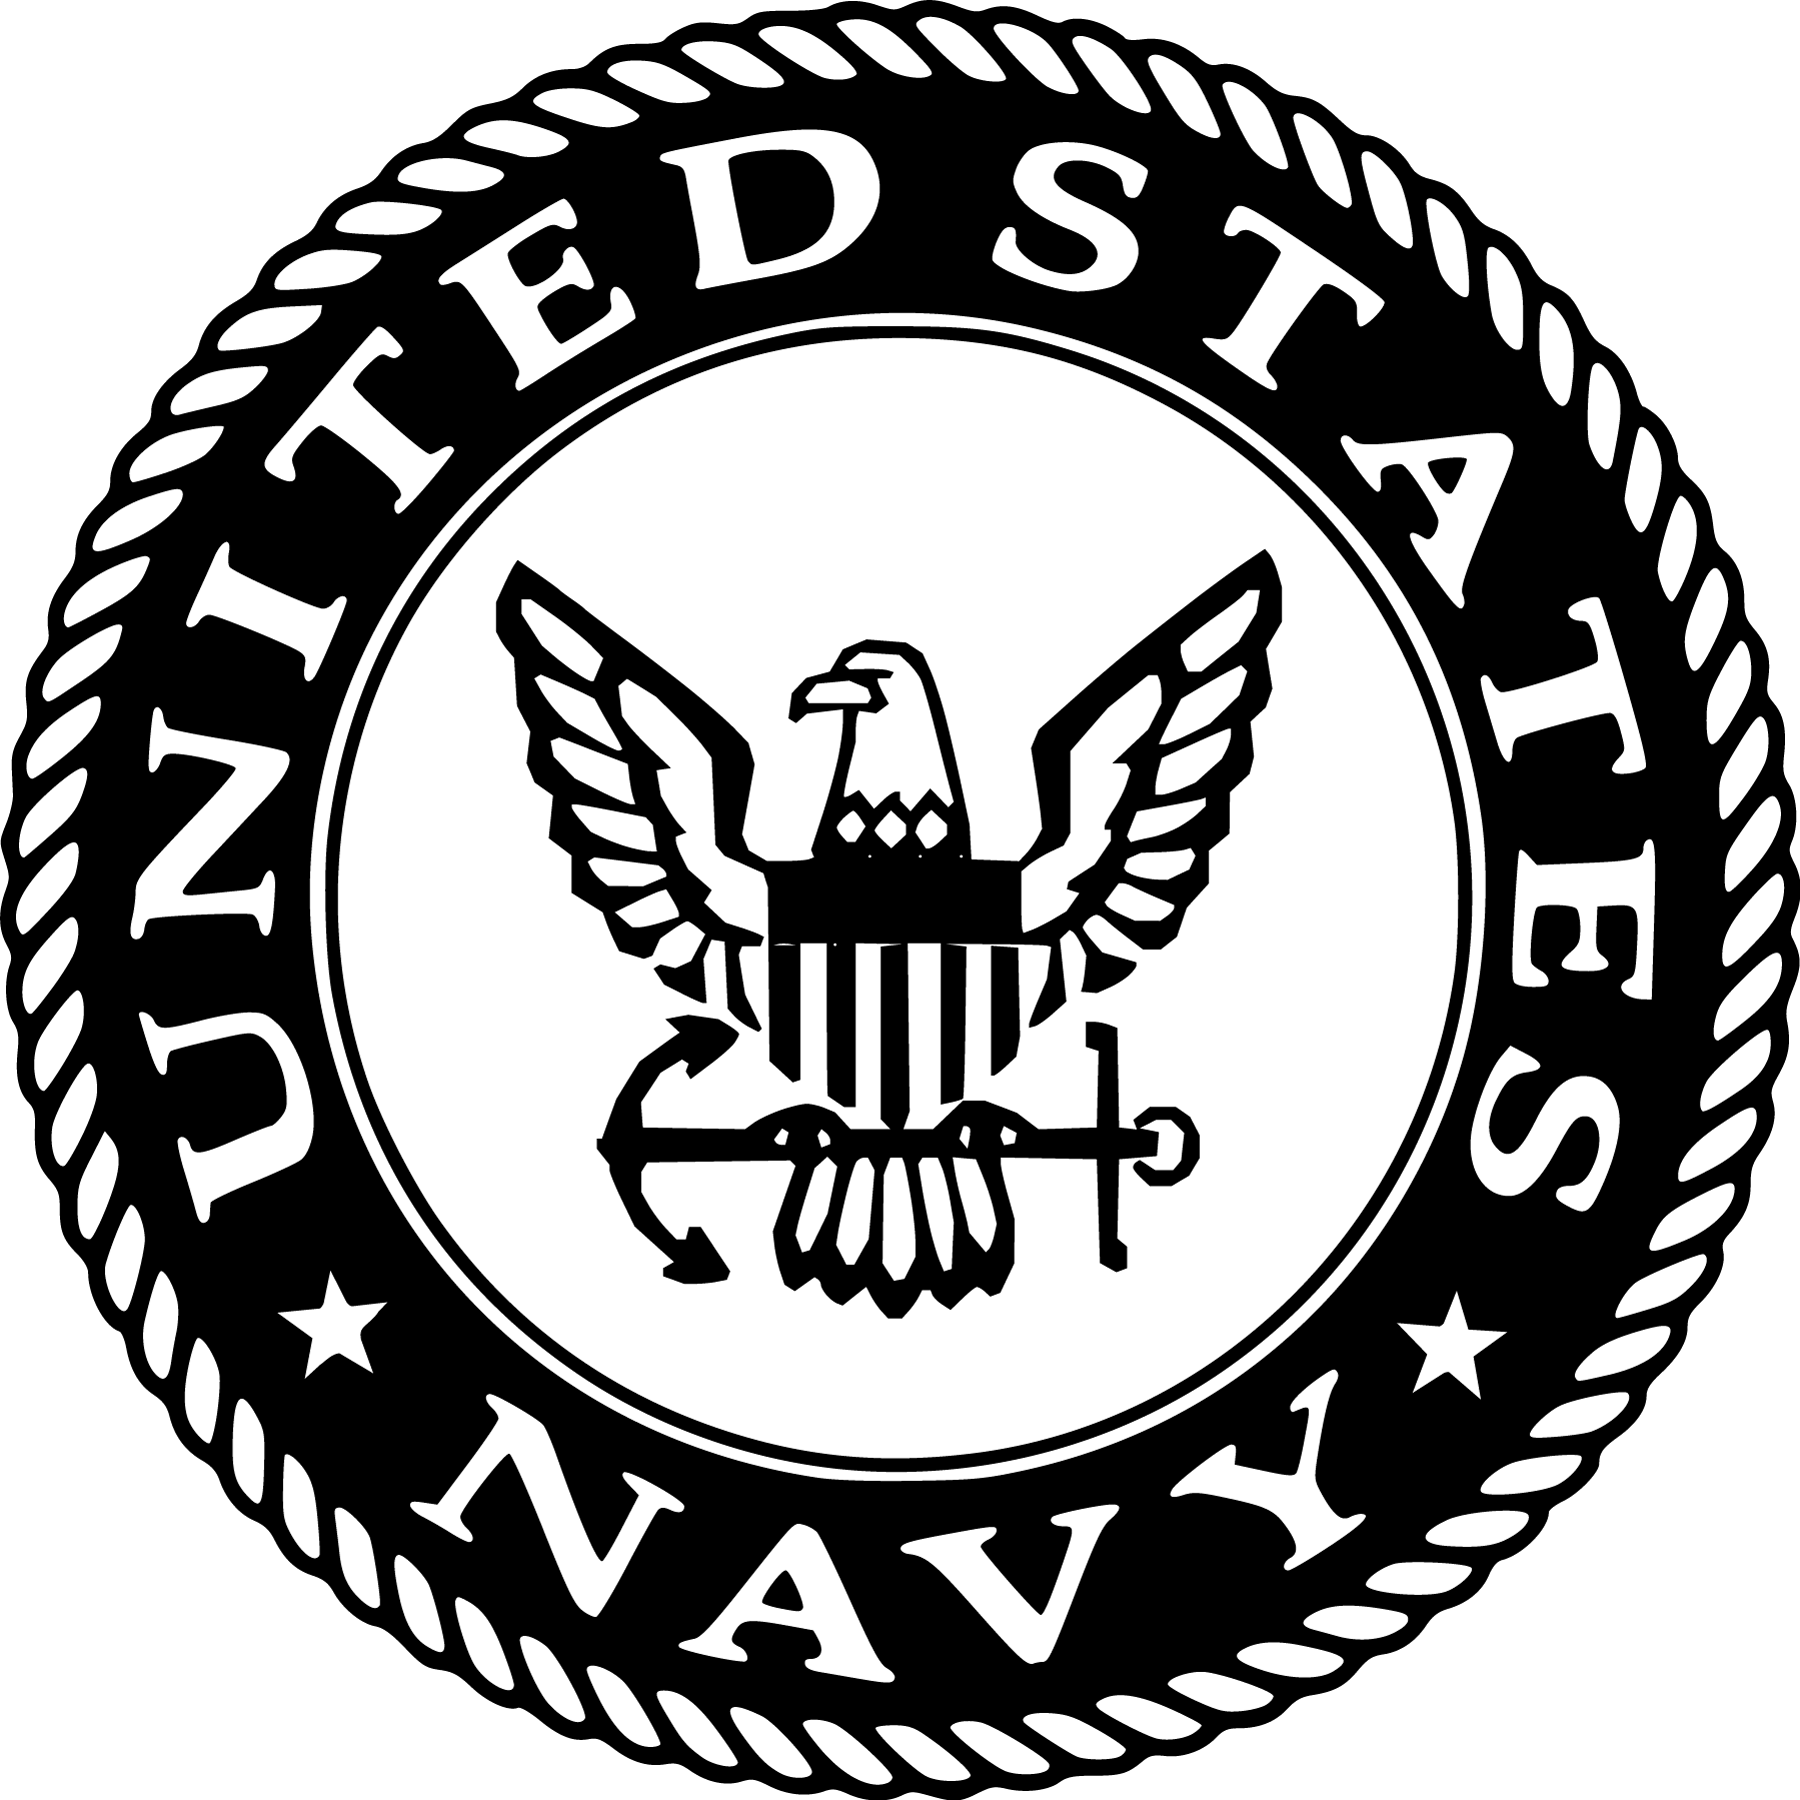 Sailor clipart sailor us navy. United states logo logos